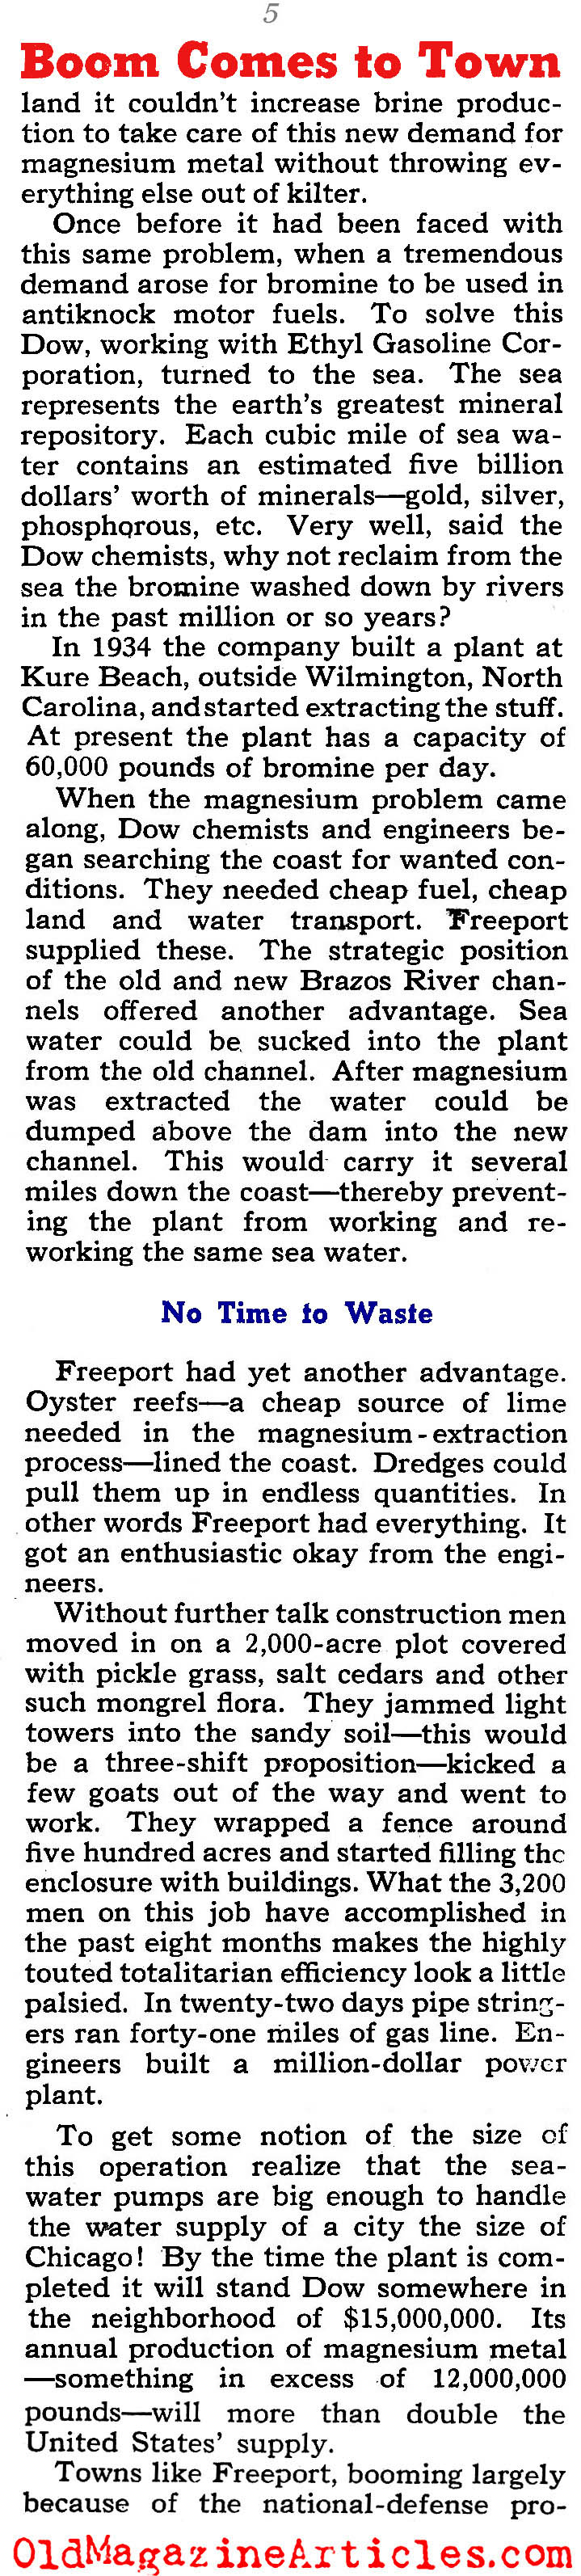 Prosperity Returns to Freeport, Texas  (Collier's Magazine, 1940)